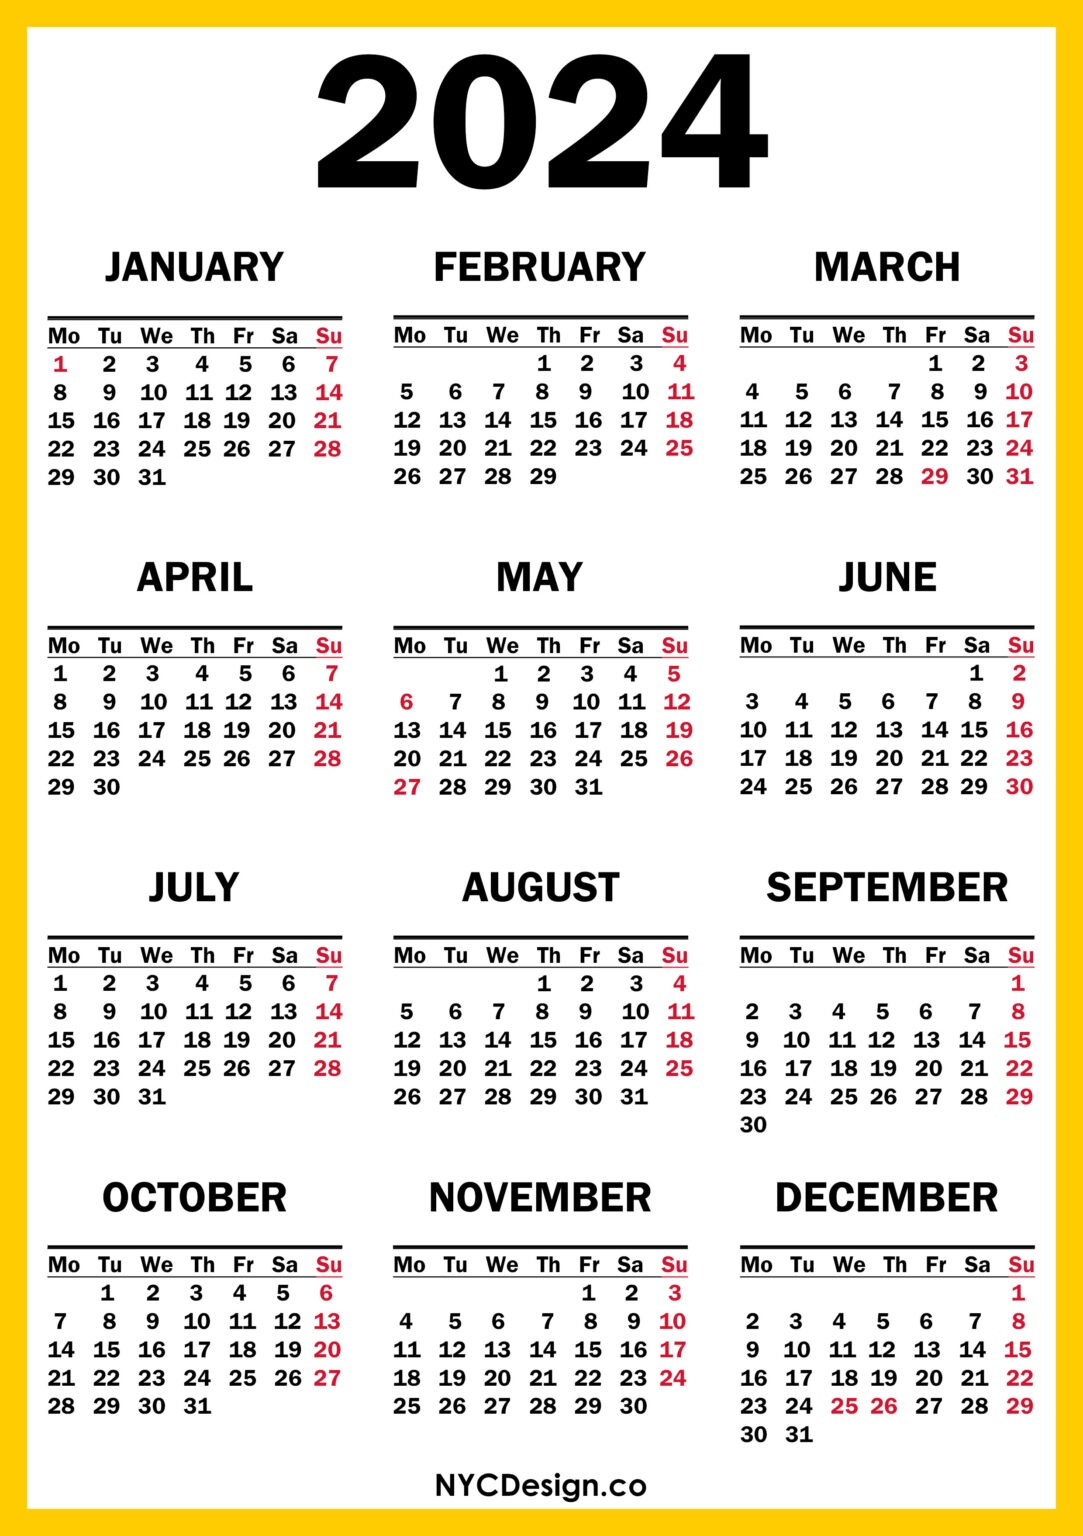 2024 Calendar Templates And Images Printable 2024 Calendar With Us - Free Printable 2024 Calendar With Holidays And Week Numbers